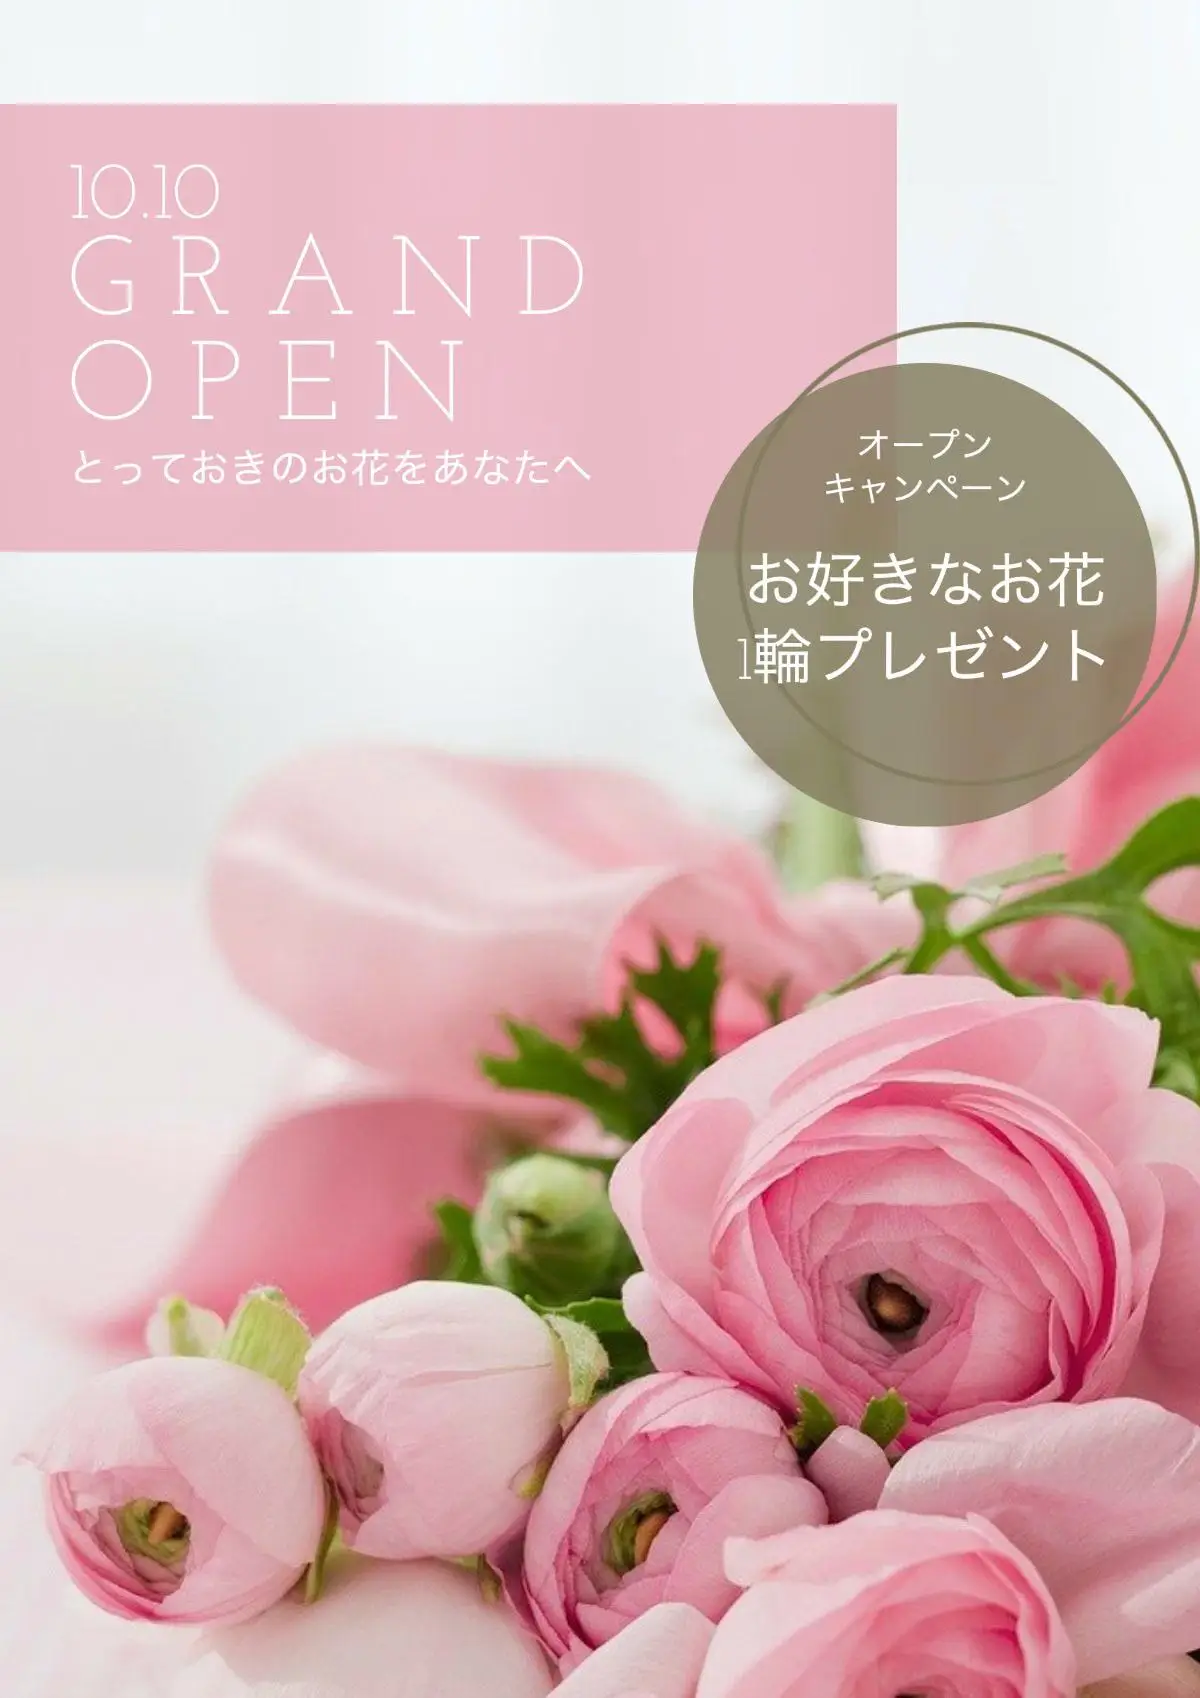 Flower shop opening flyer